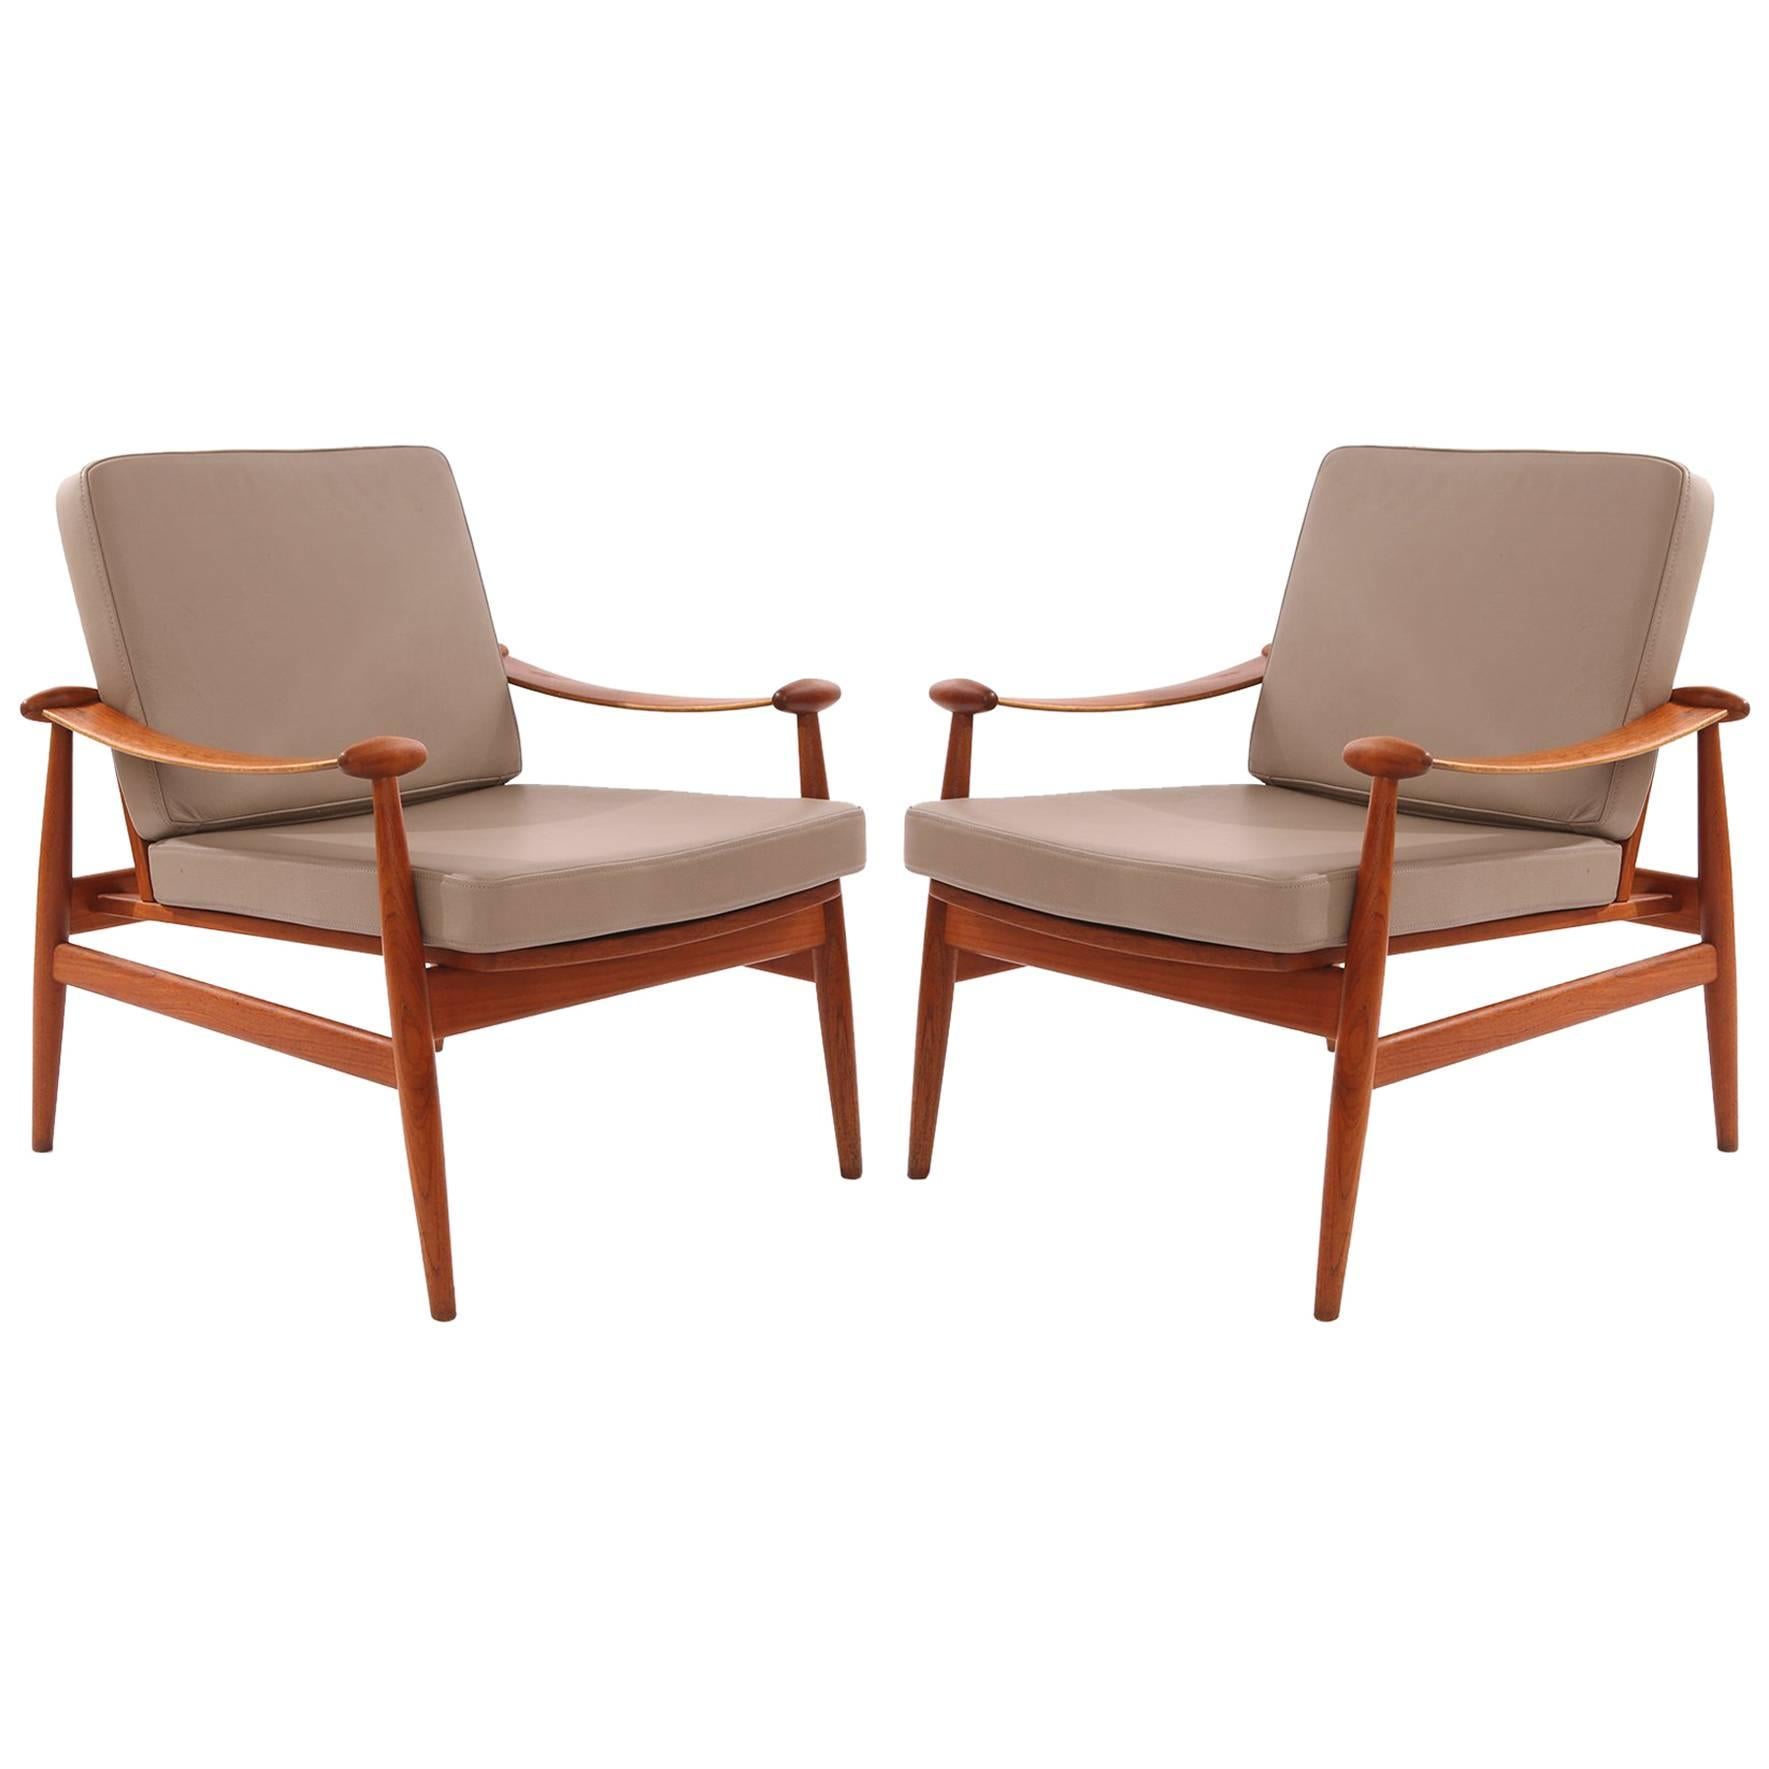 Pair of Finn Juhl Teak & Leather Lounge Chairs